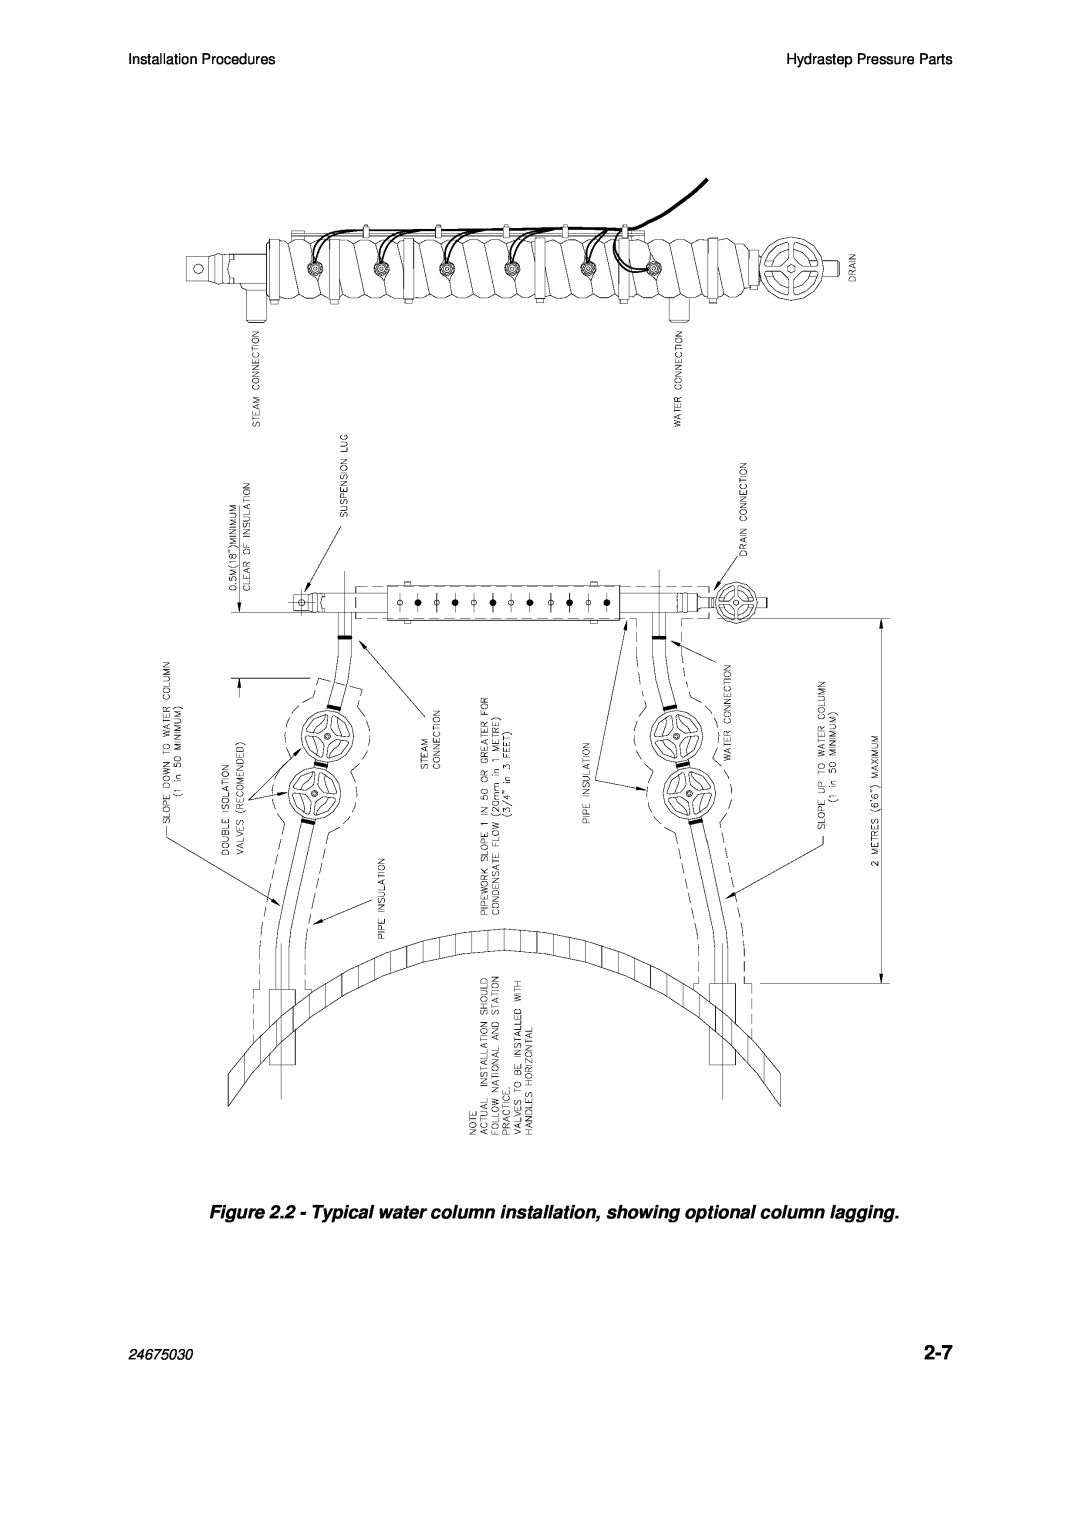 Emerson 2468CD, 2468CB manual Installation Procedures, 24675030 